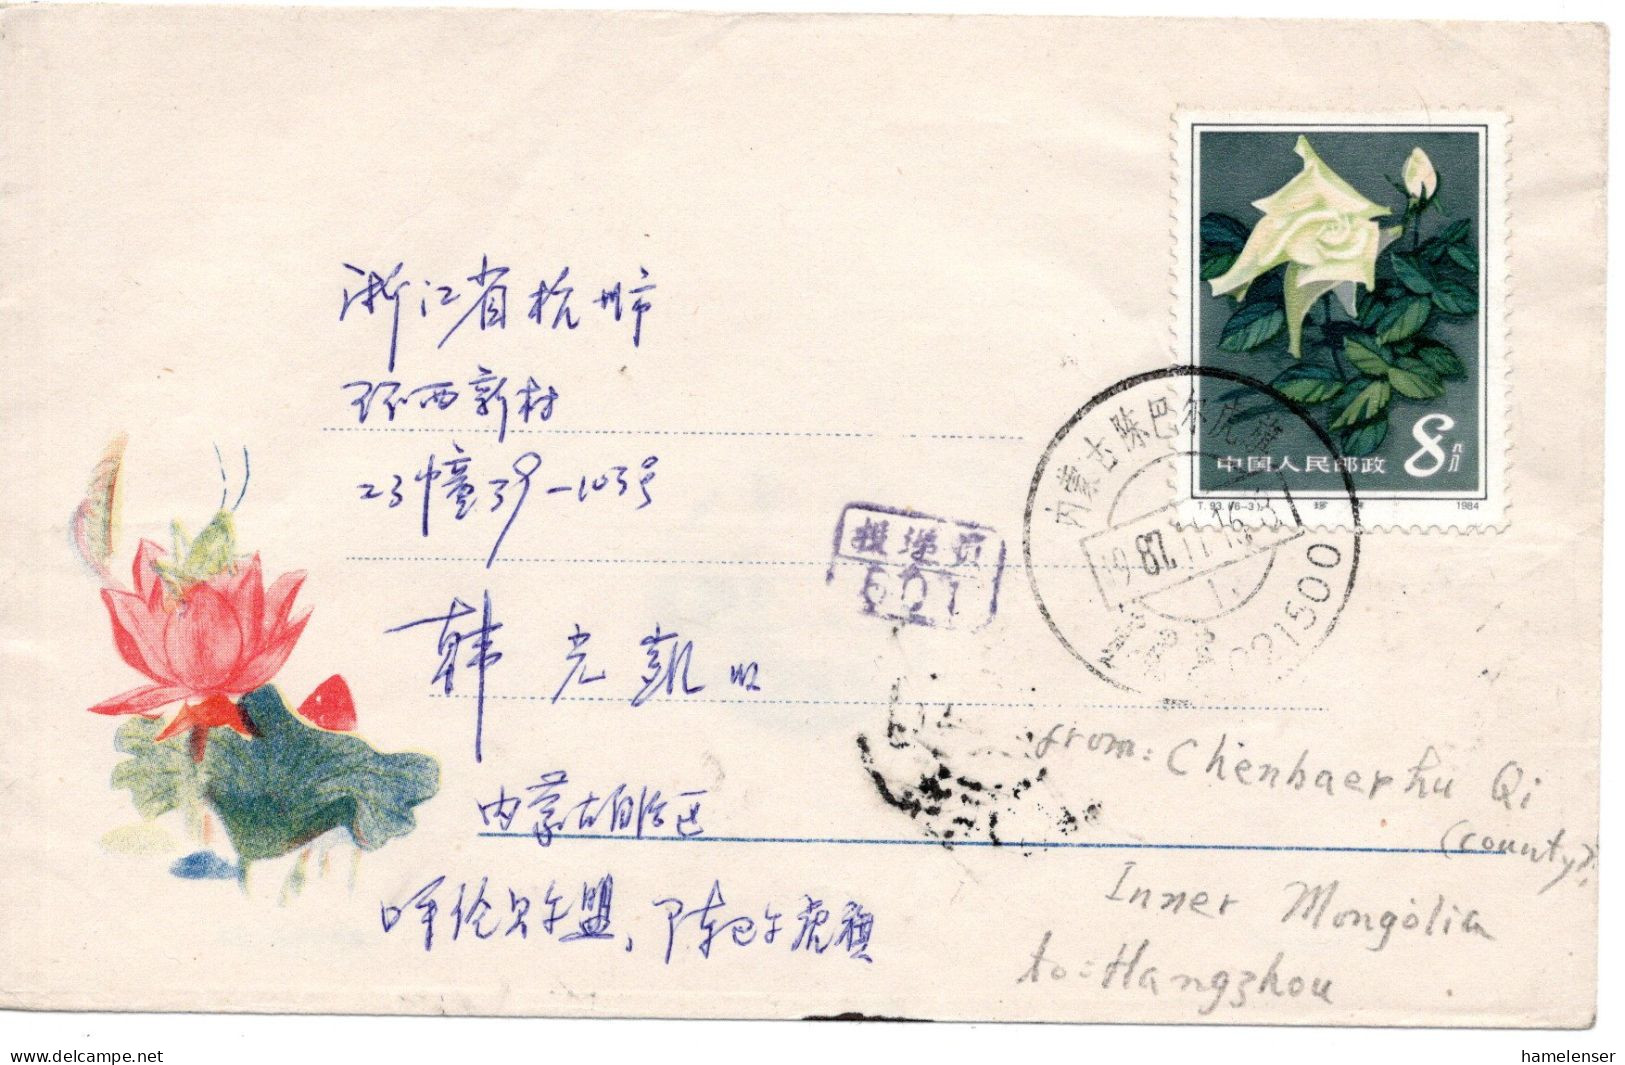 67600 - VR China - 1987 - 8f Rosen EF A Bf NEIMENGGU CHENHAERHU QI -> HANGZHOU - Covers & Documents